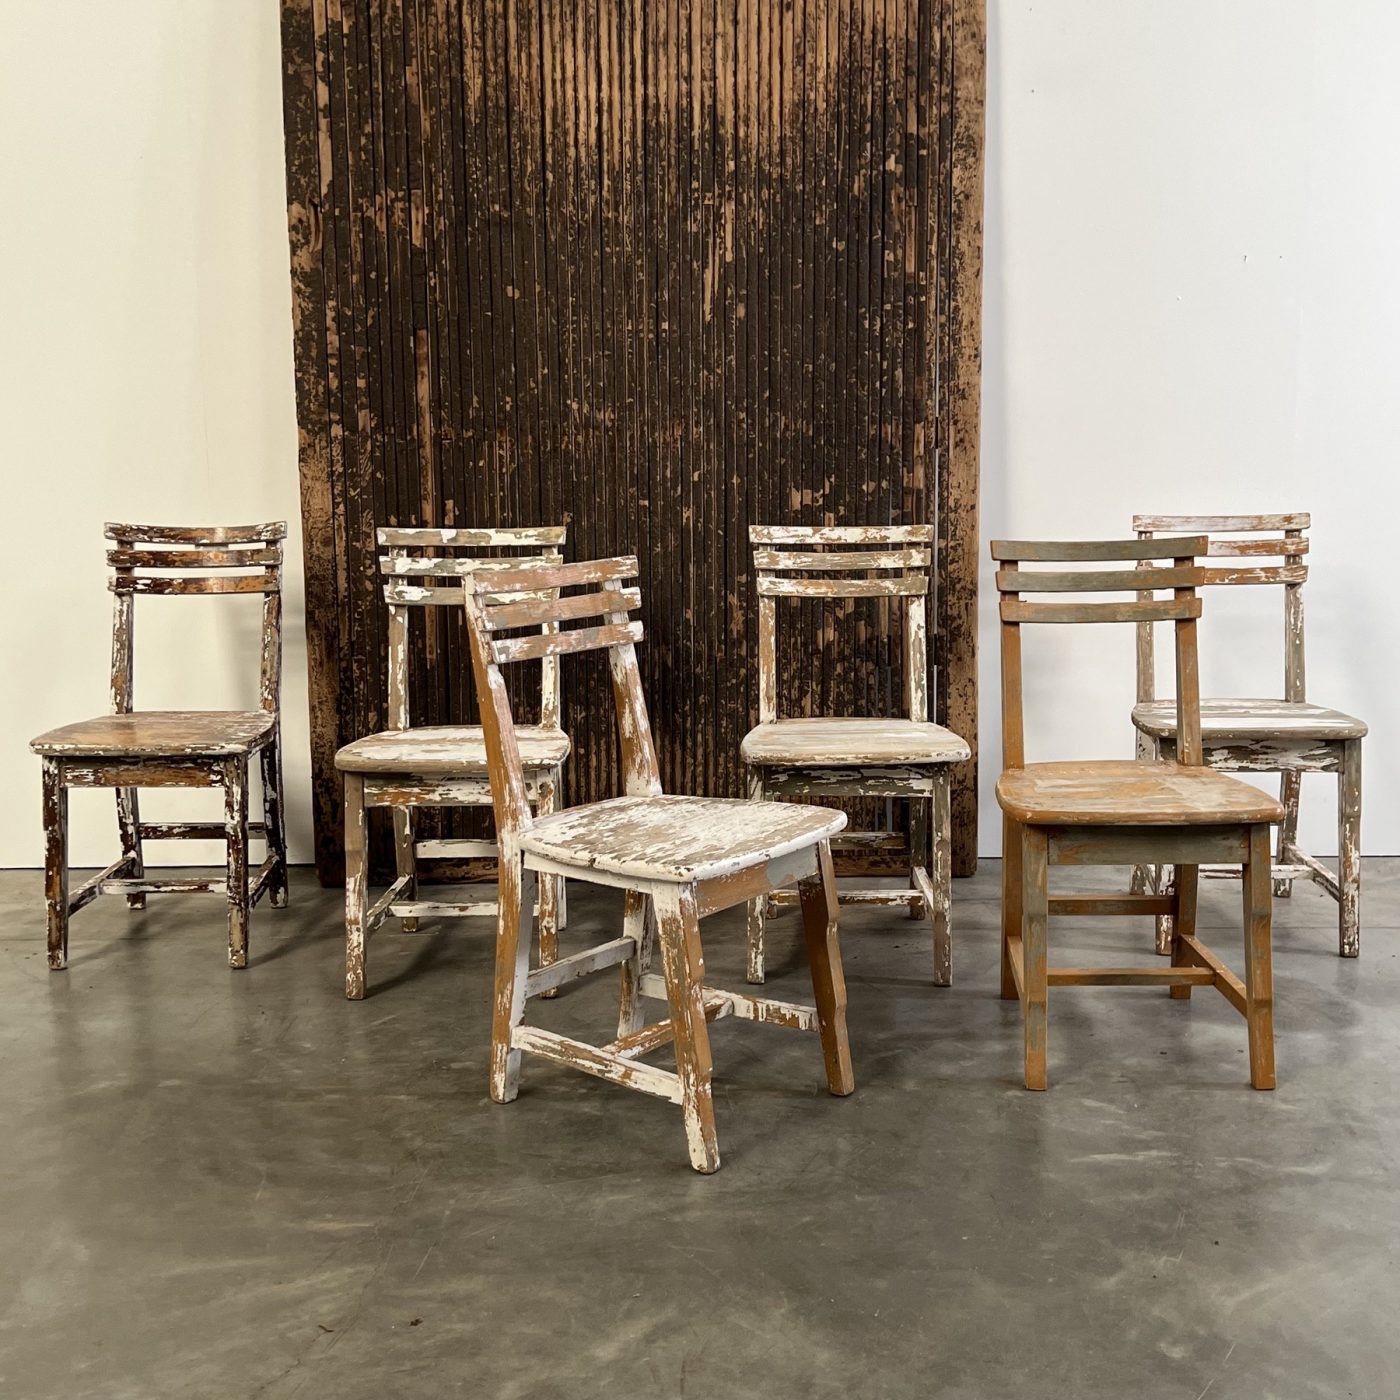 objet-vagabond-painted-chairs0004